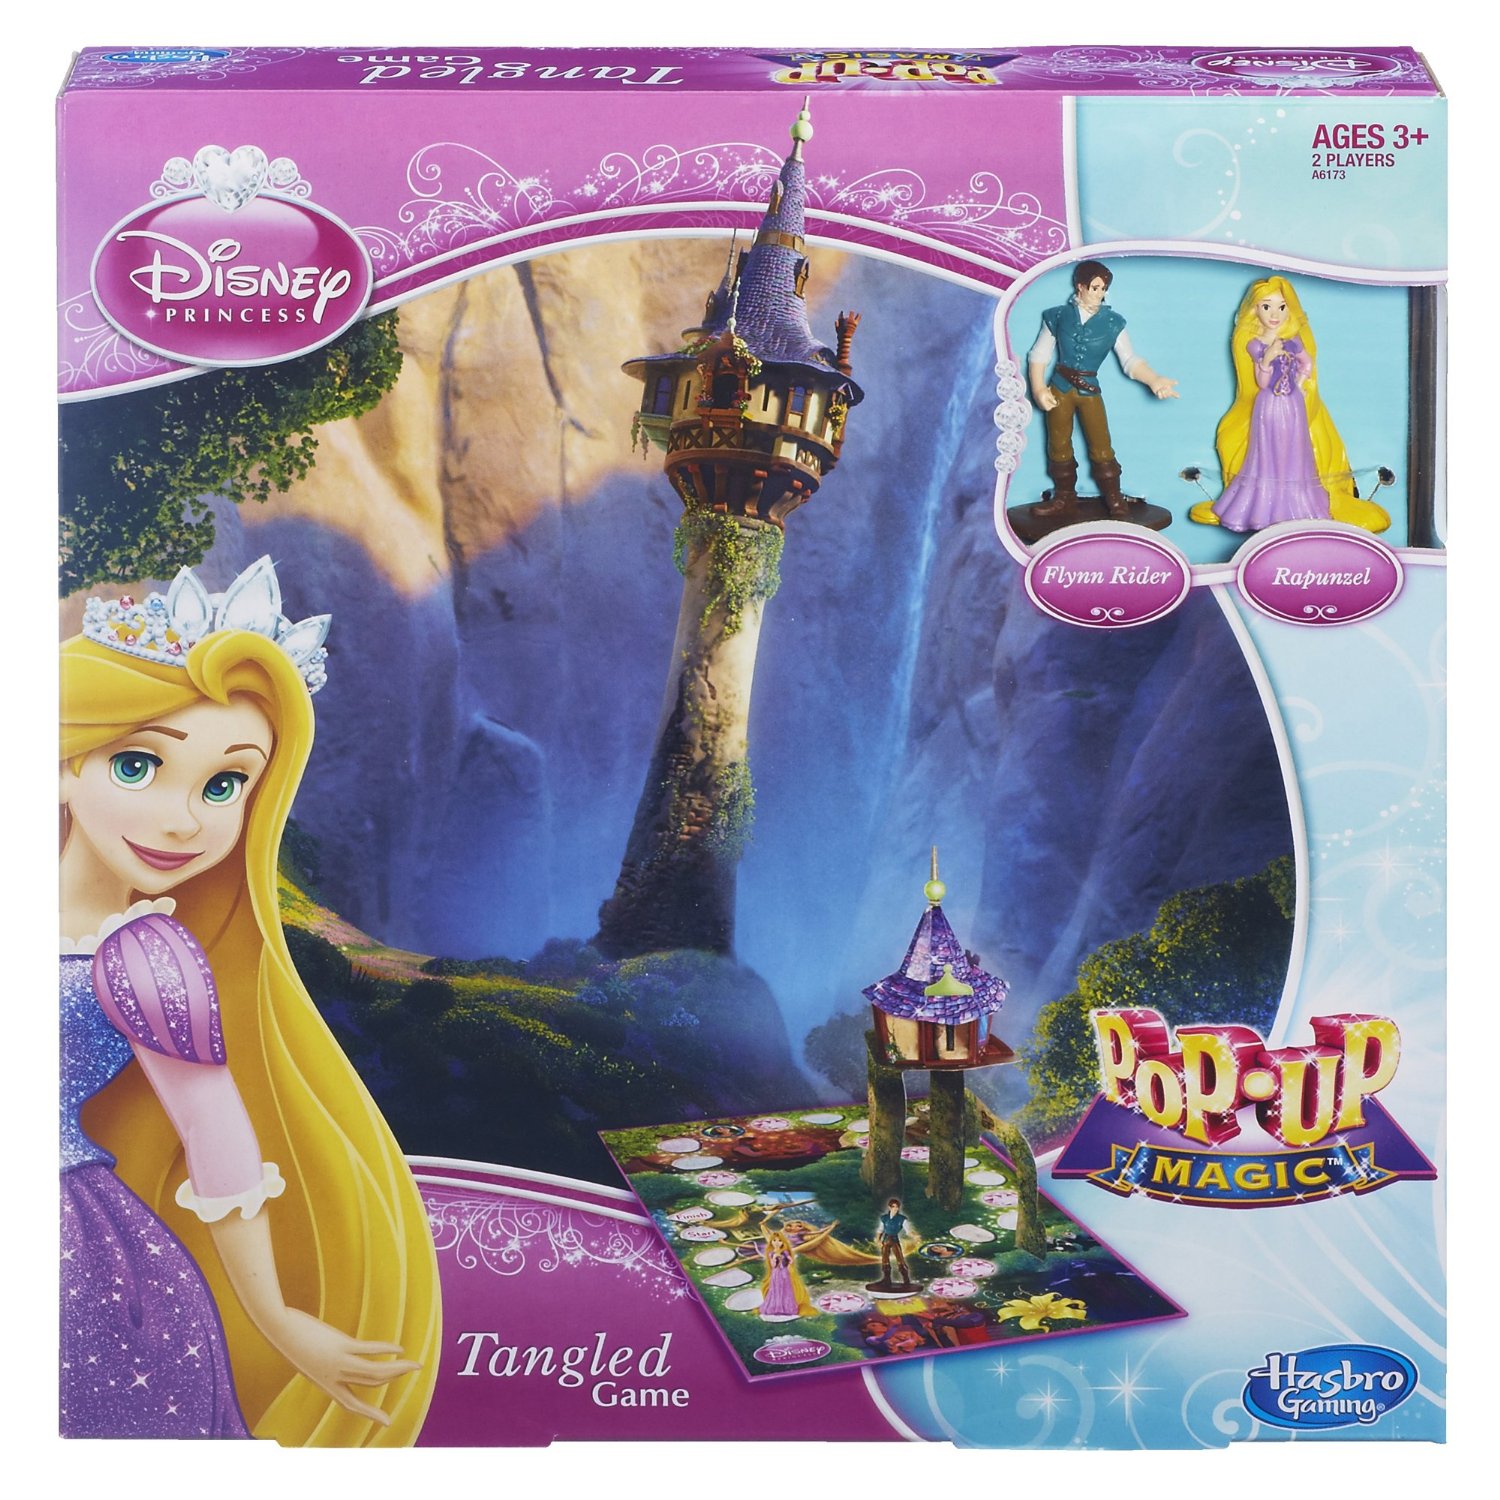 Disney Princess Pop-Up Magic Tangled Game Only $5.62 – 63% Savings